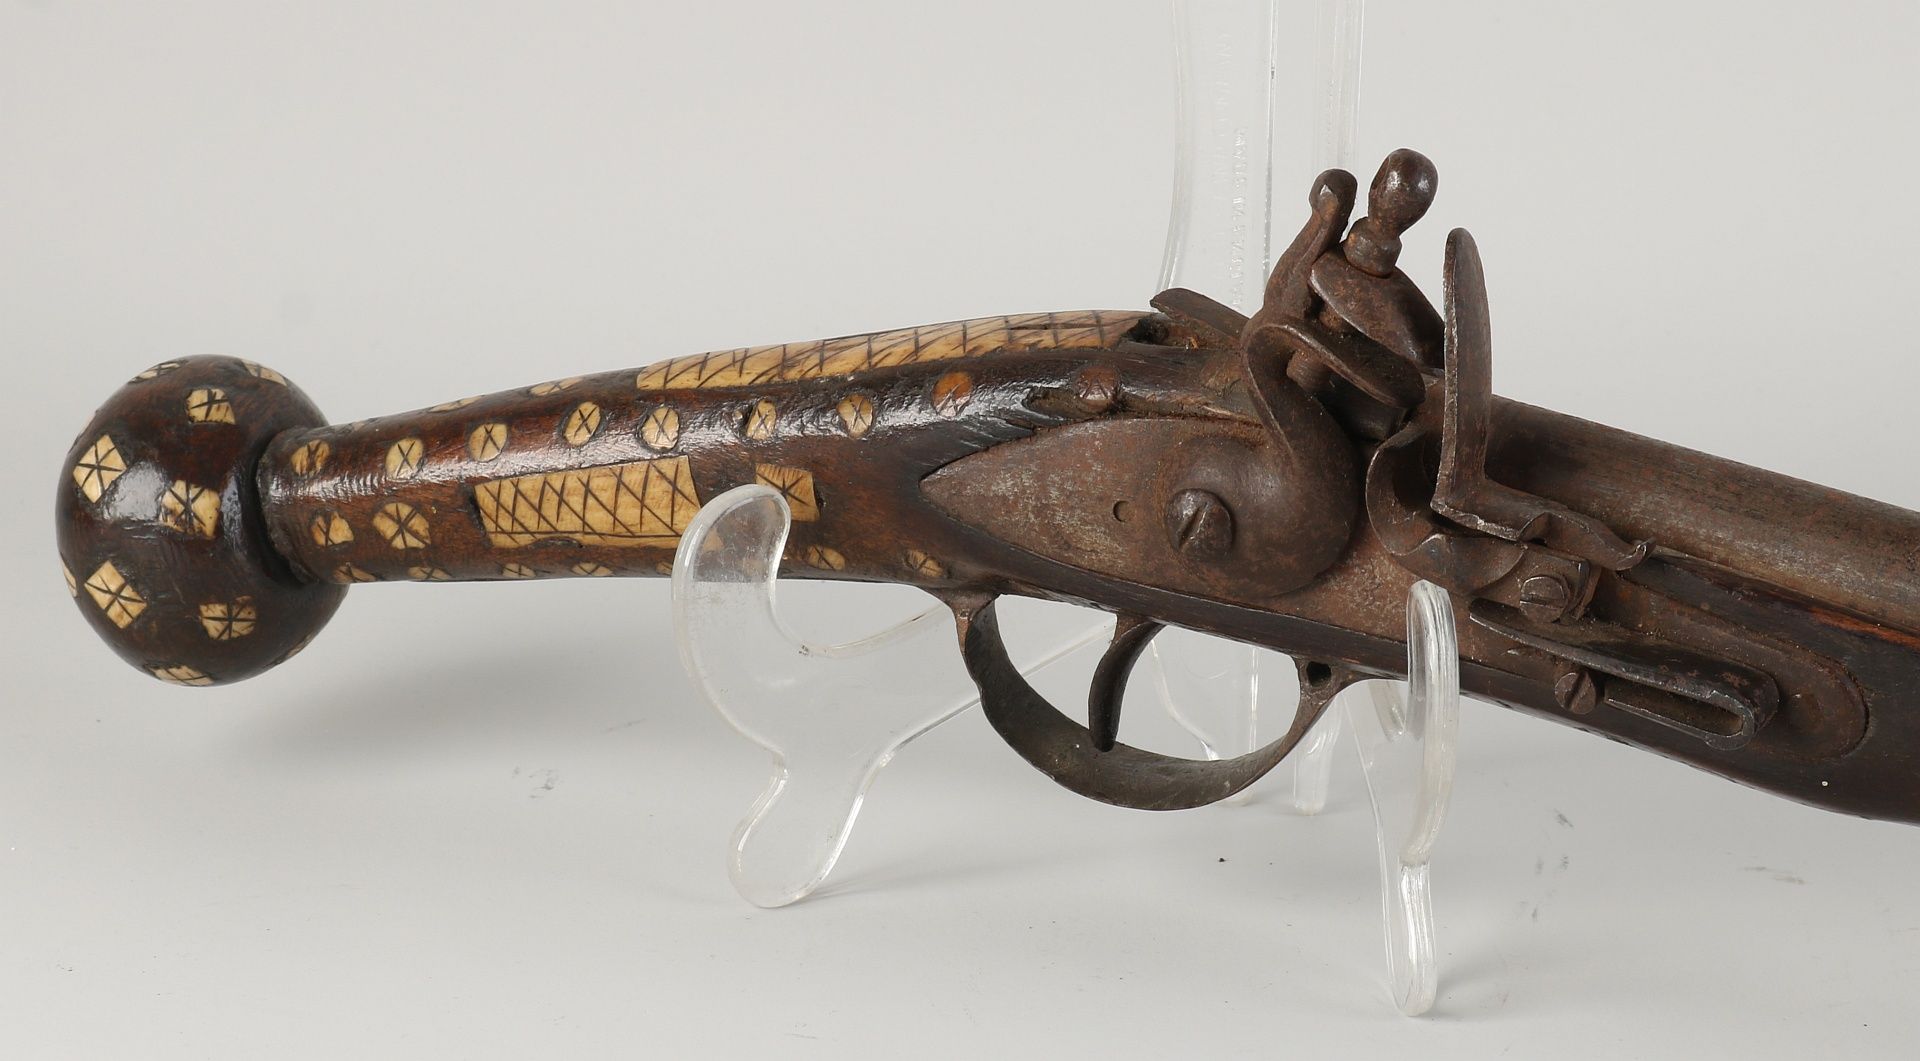 Antique flint gun - Image 2 of 3